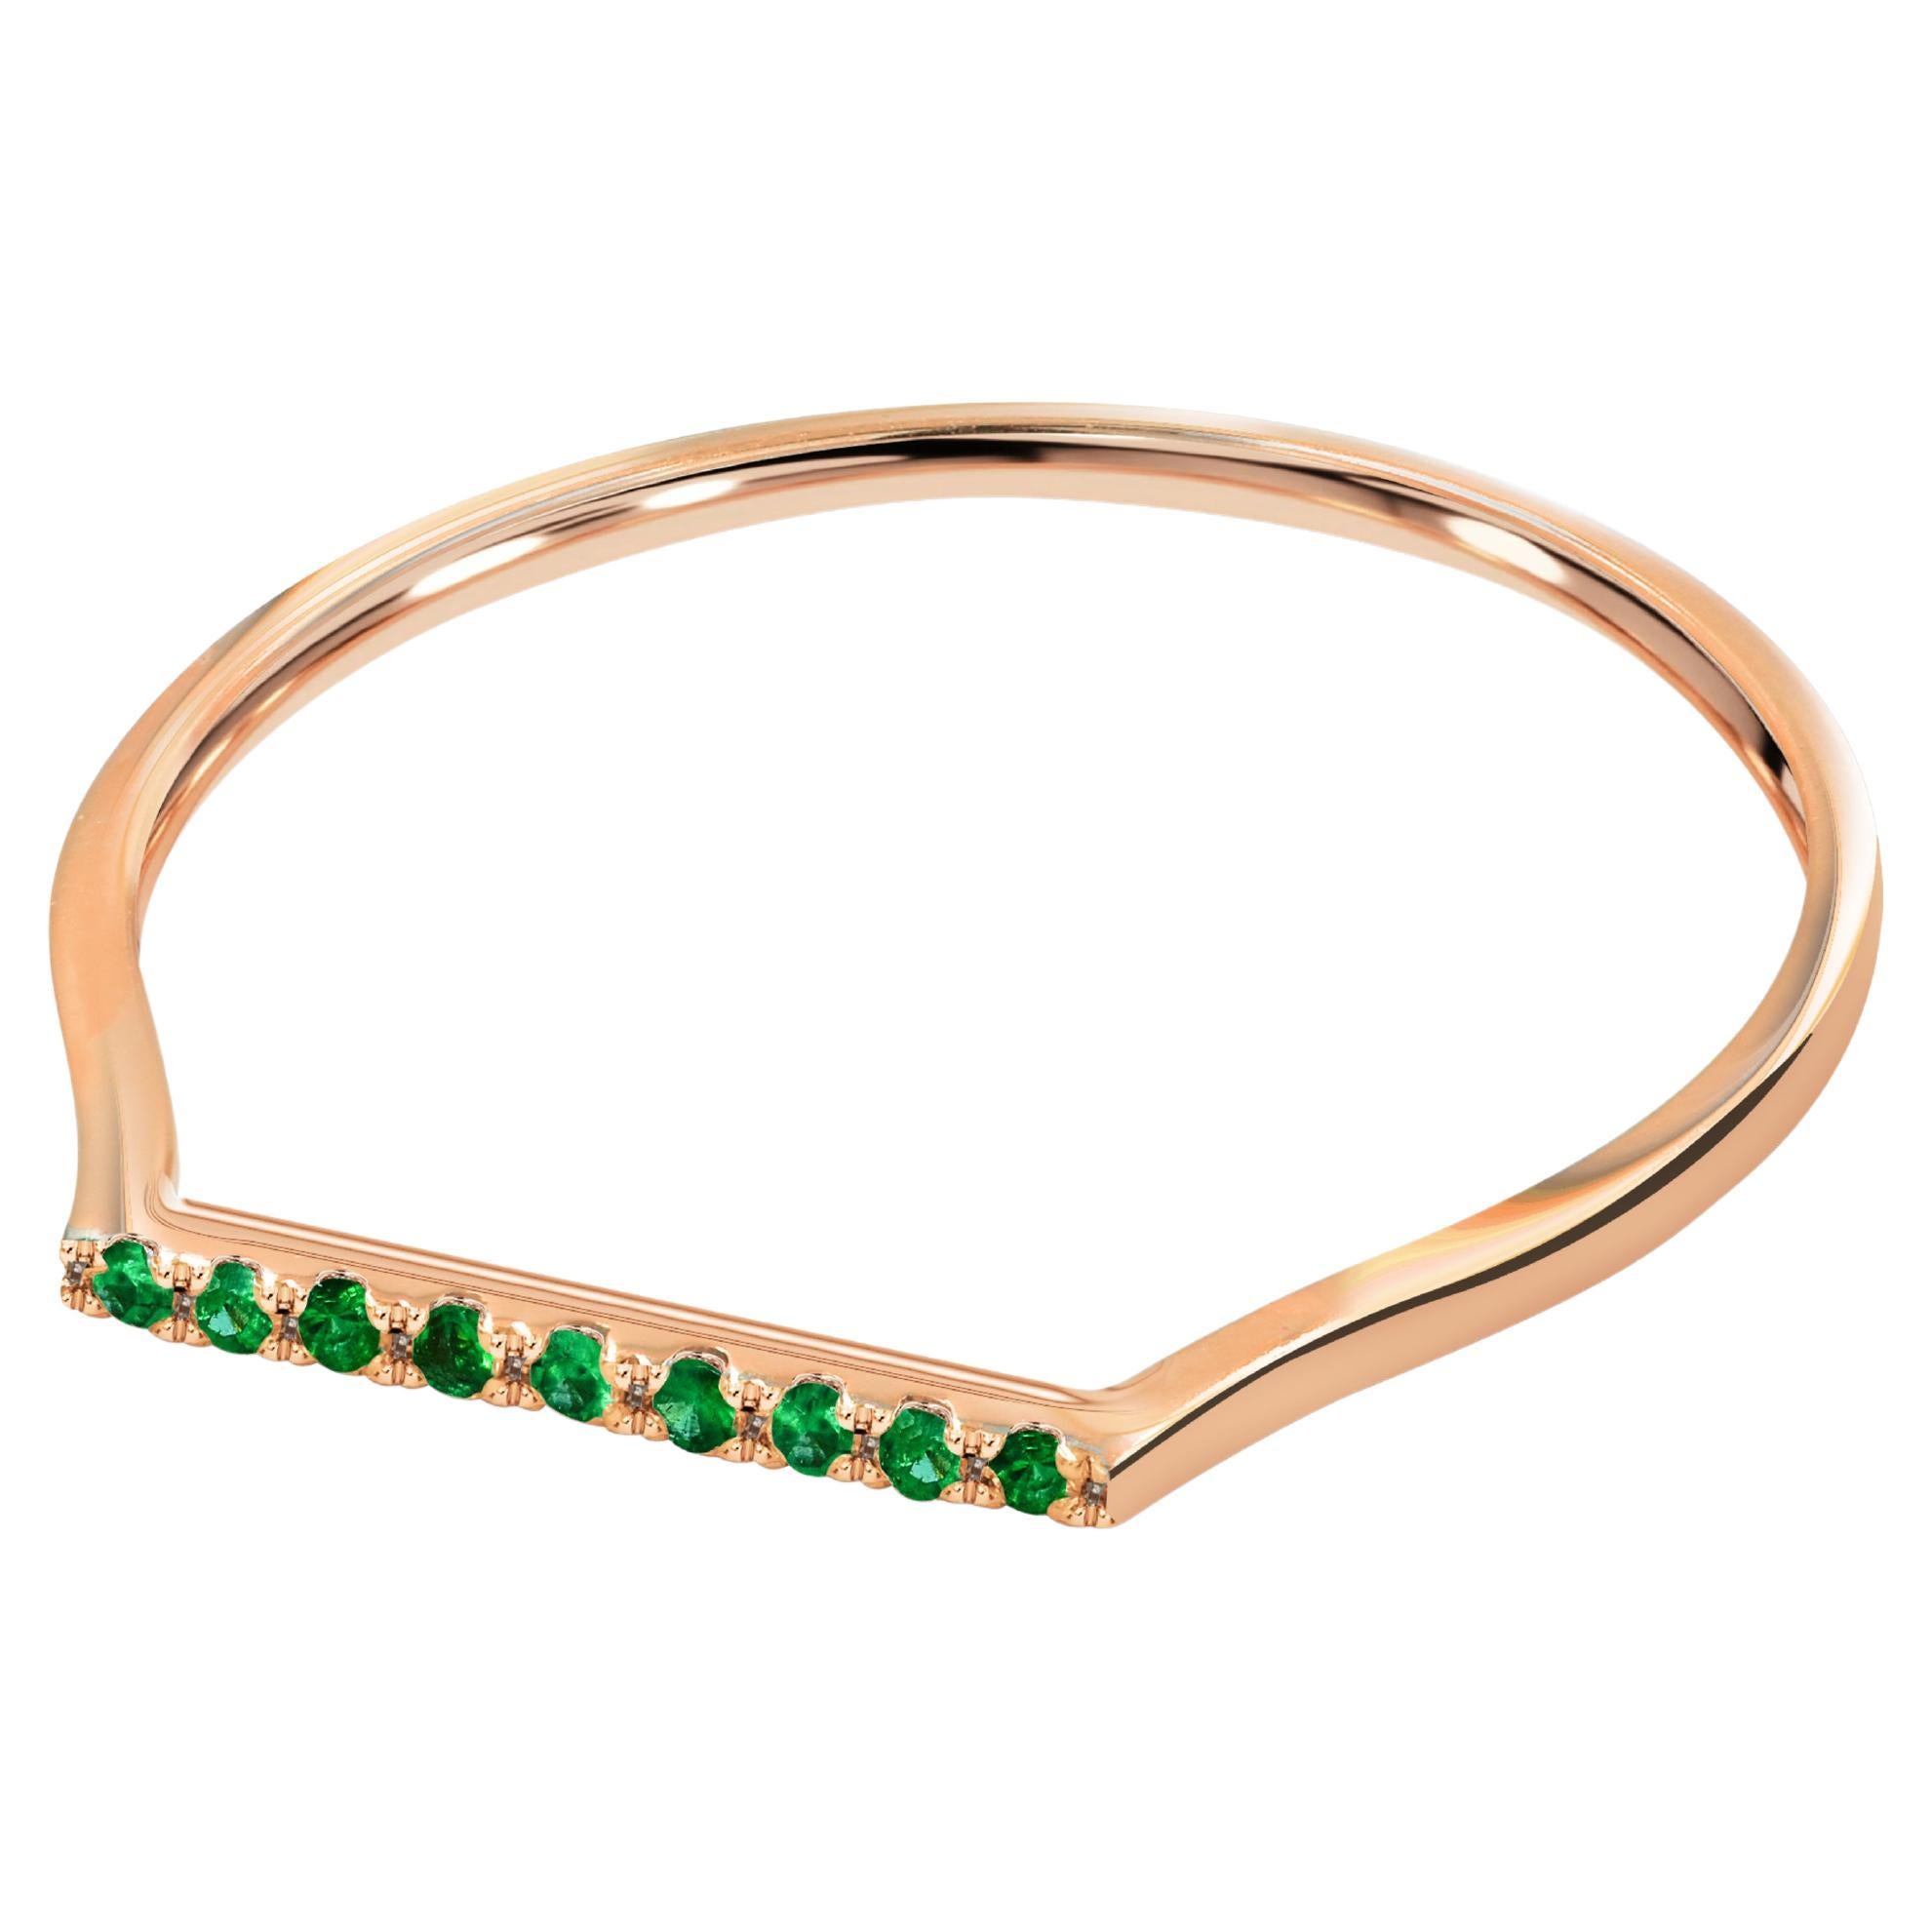 Im Angebot: 14k Massivgold Natrlicher Smaragd Ring dnner Smaragd Stapelring ()